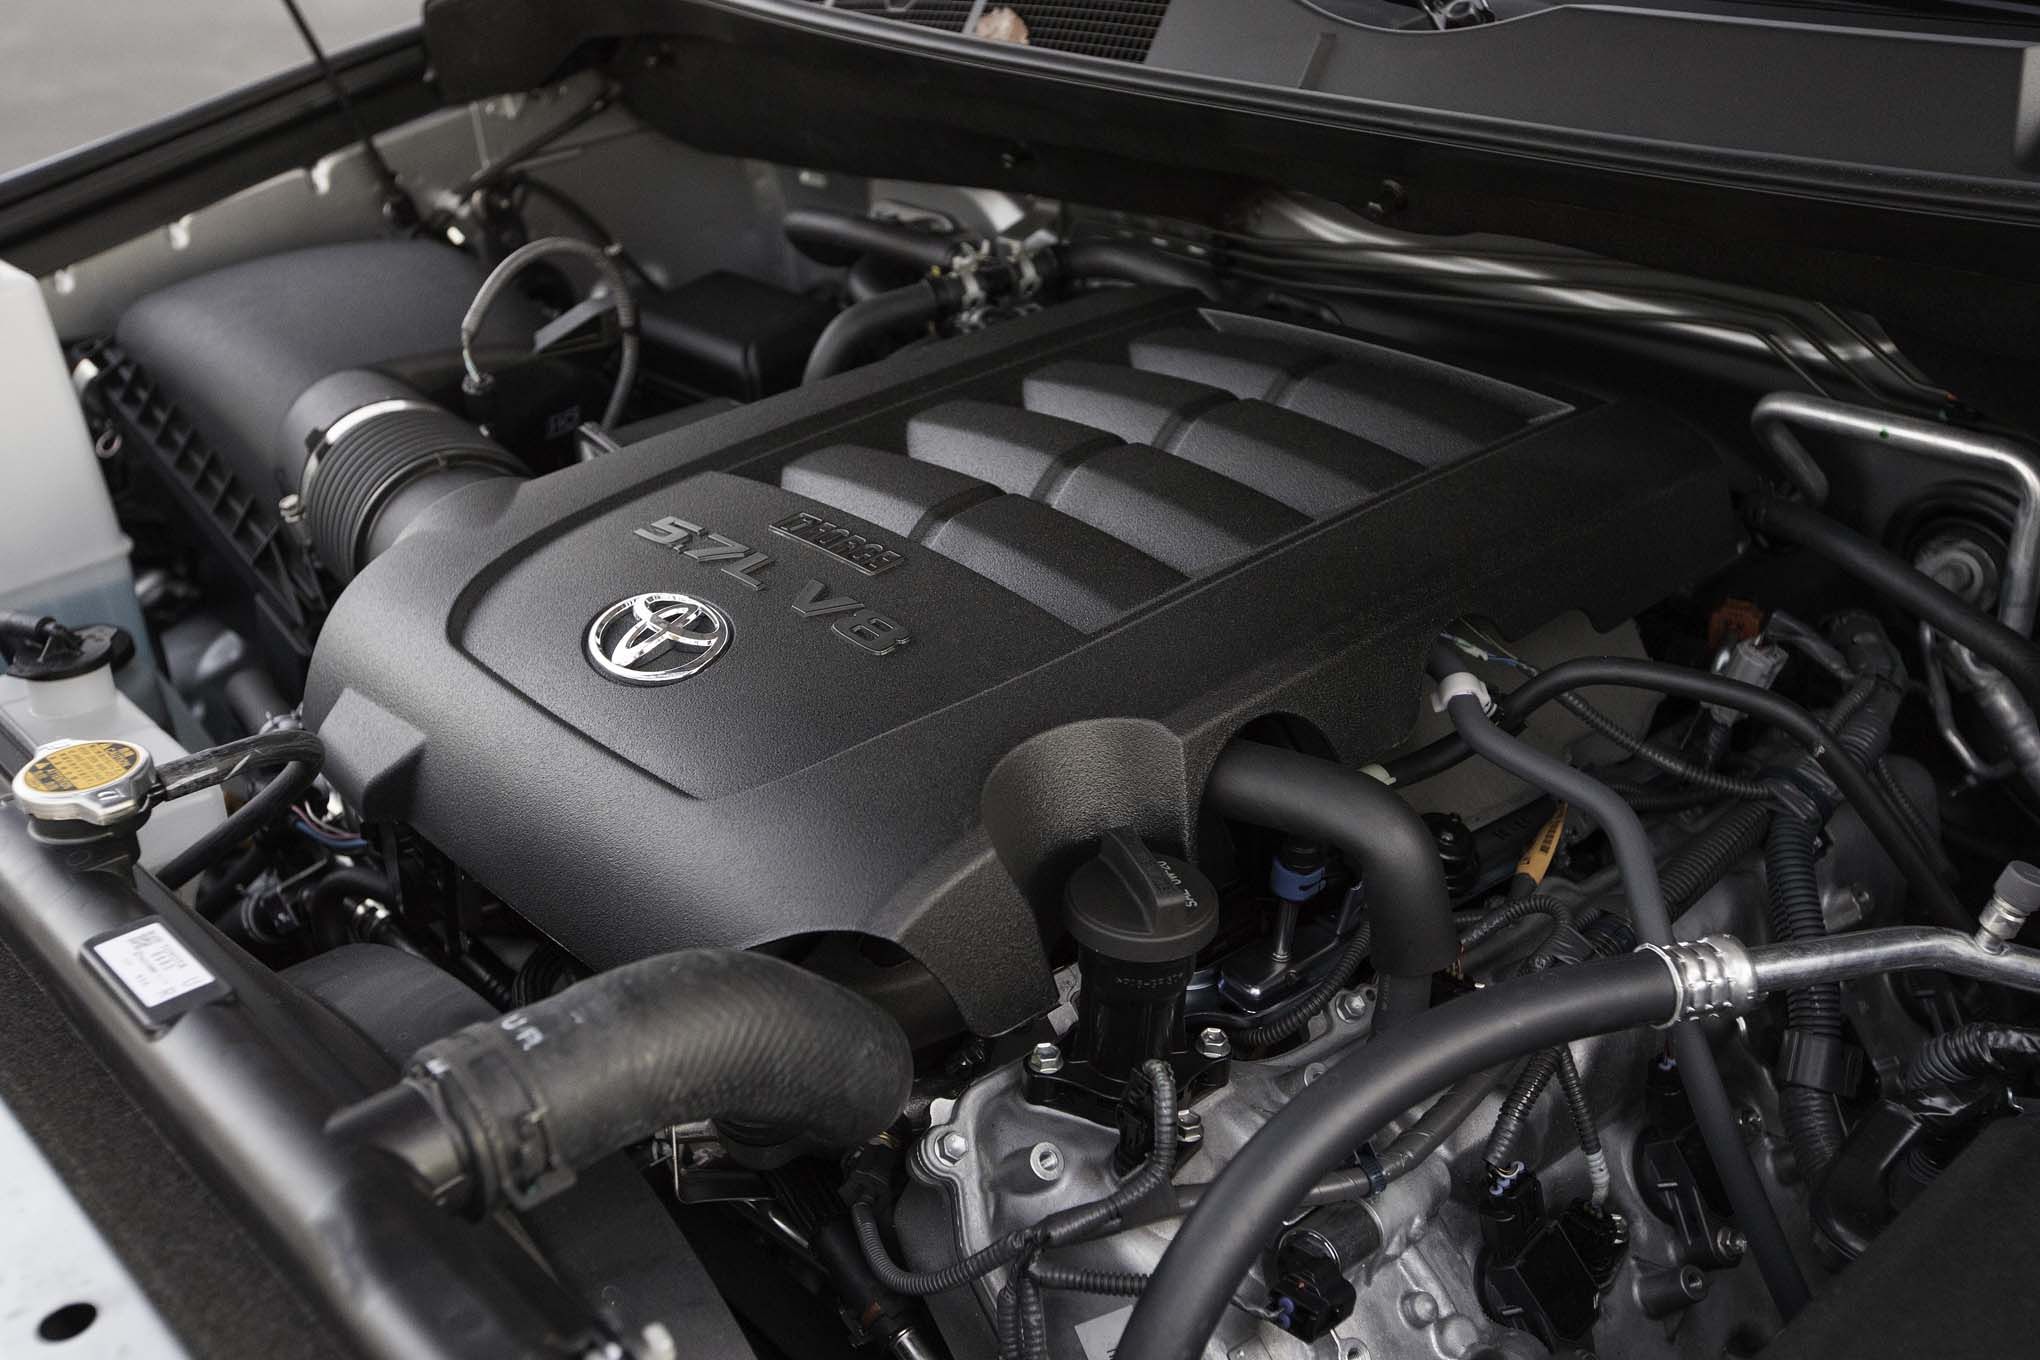 2017 Toyota Sequoia 4×4 Platinum View Engine (View 14 of 26)